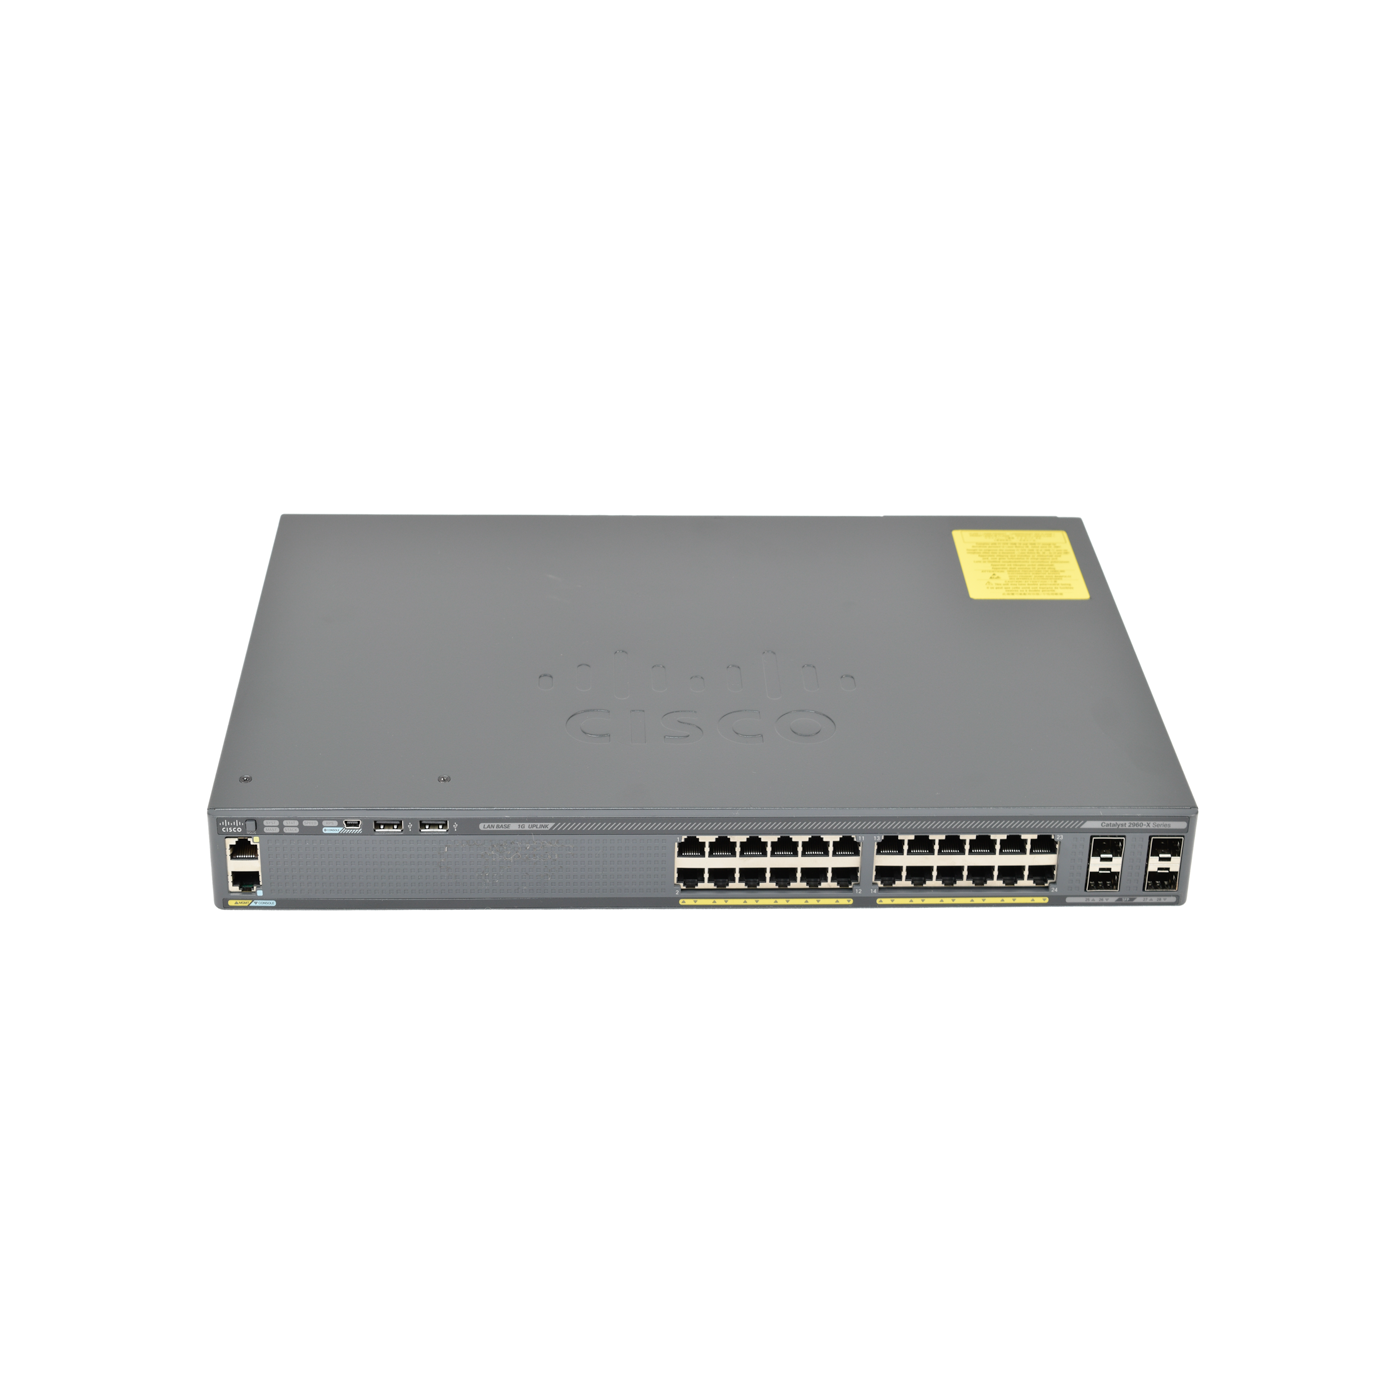 Cisco WS-C2960X-24TS-L++ Switch Front